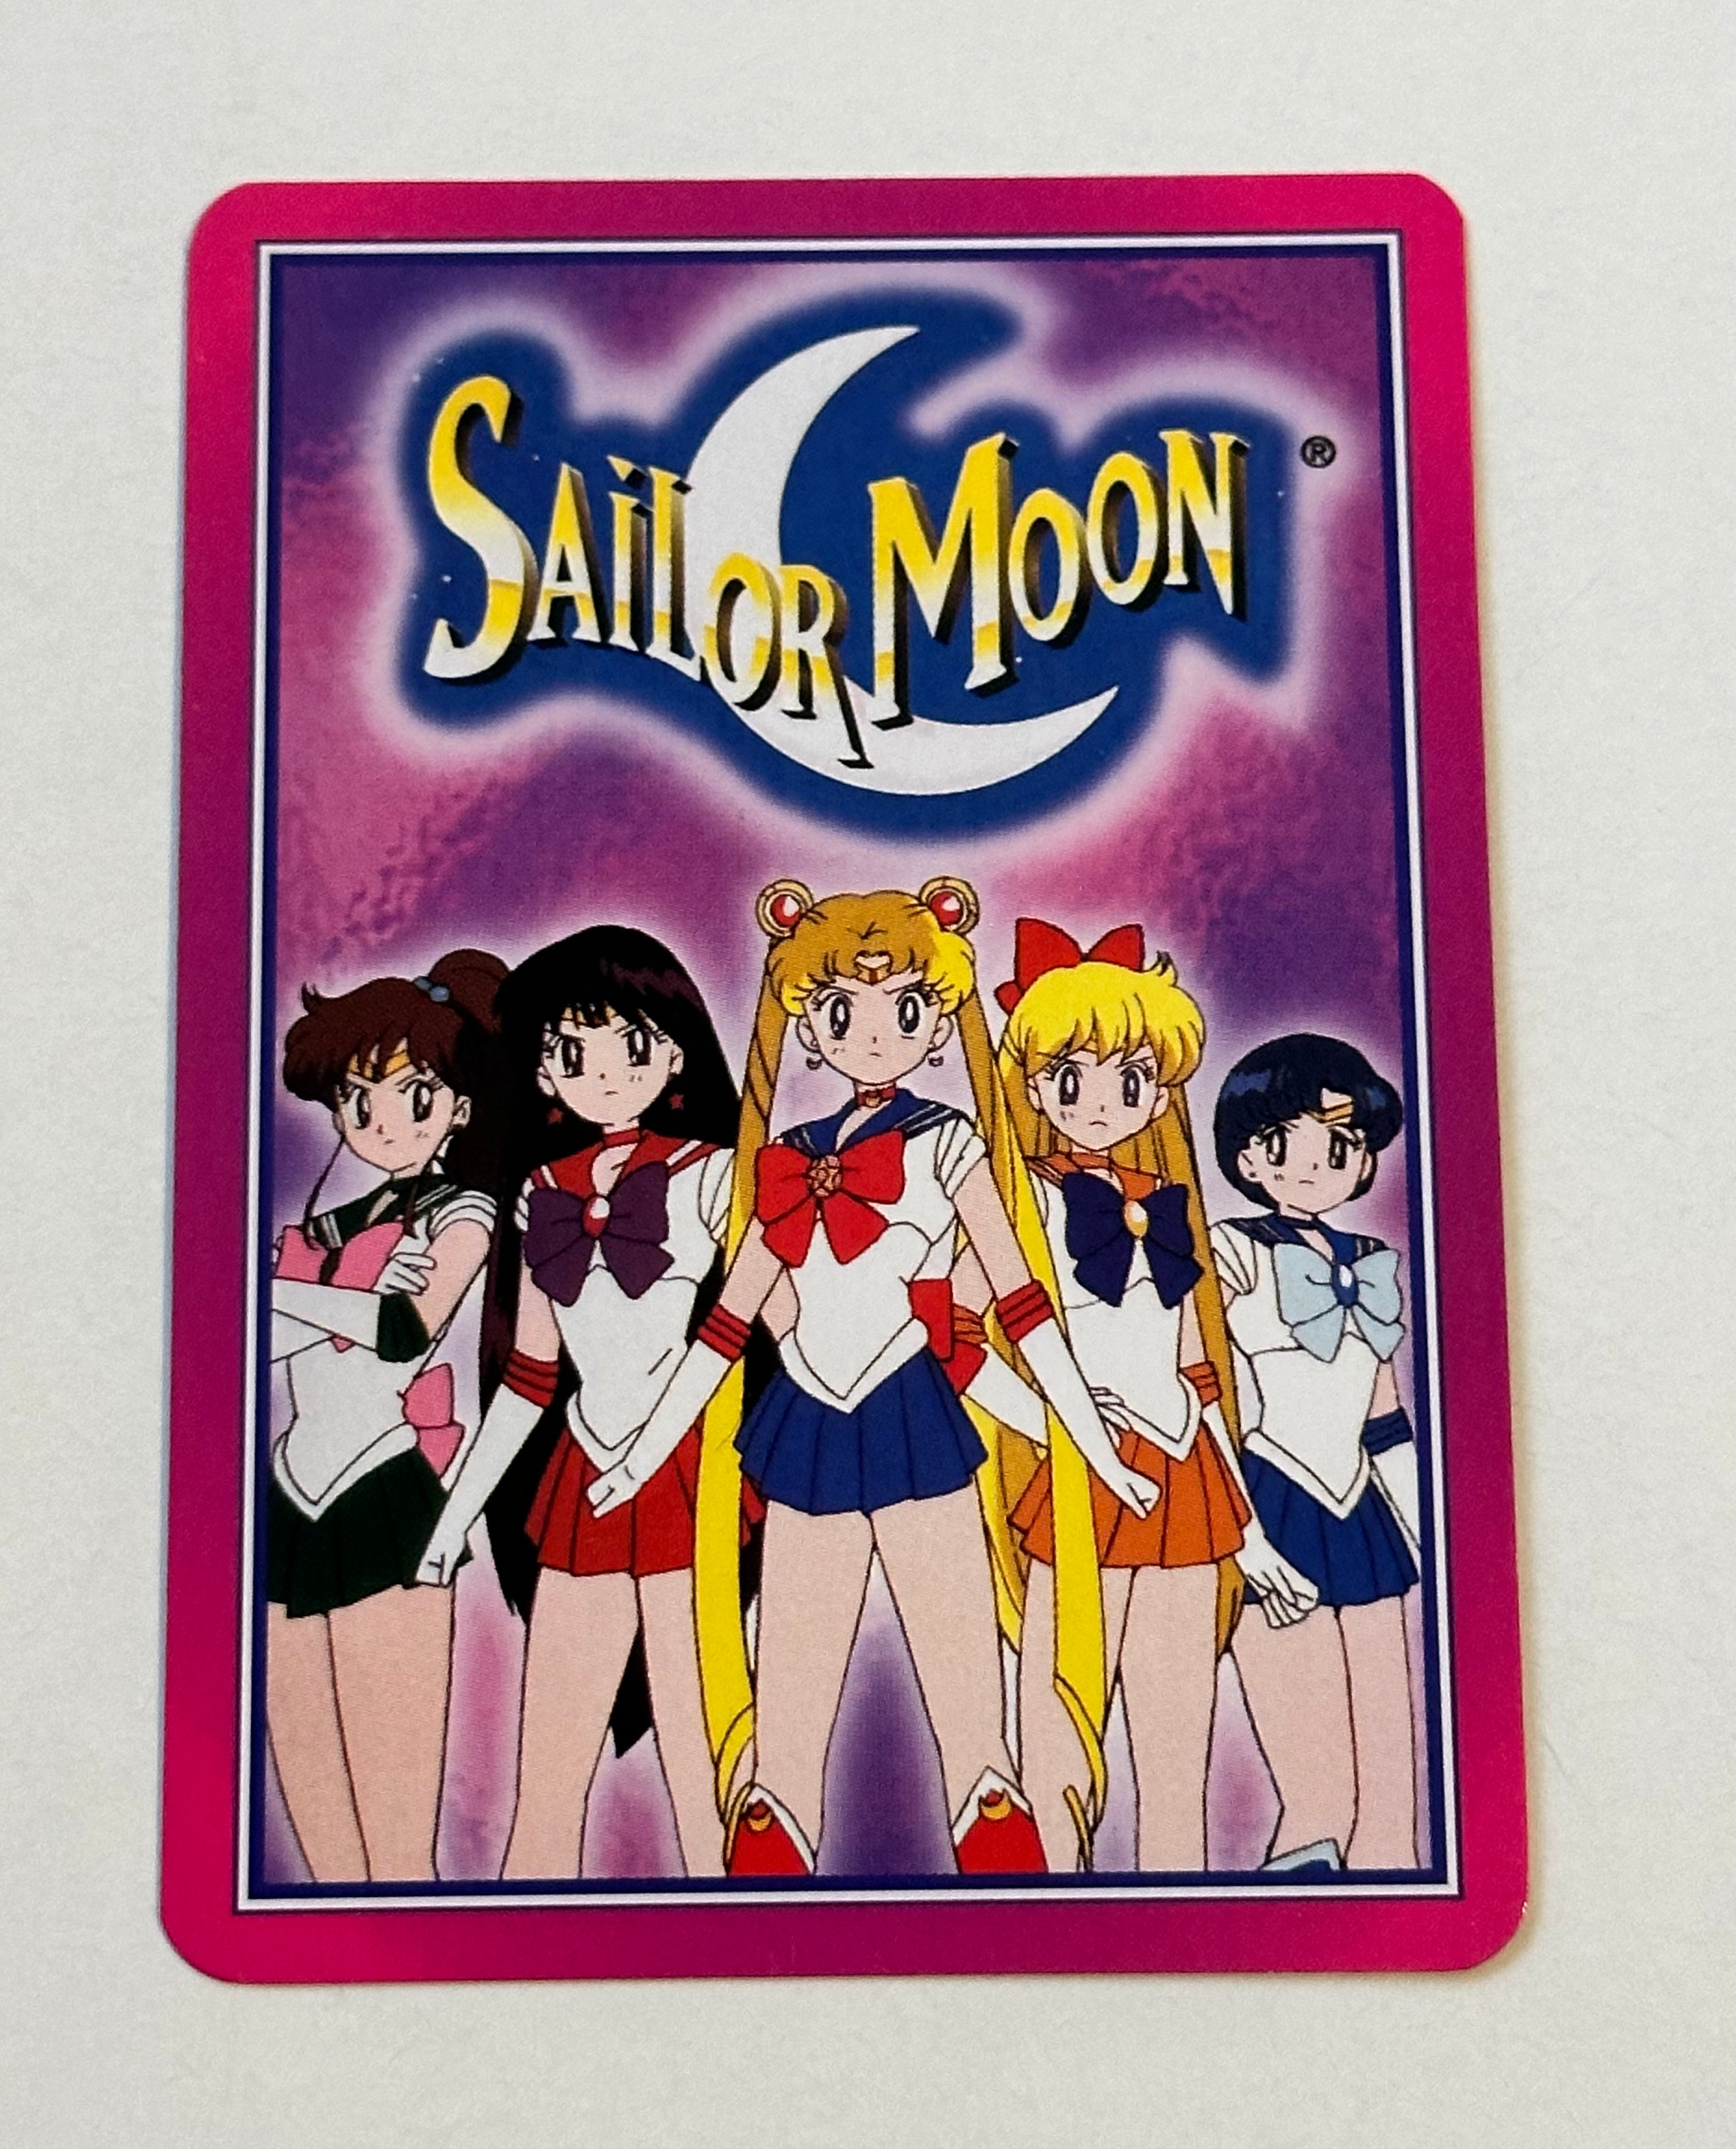 Sailor Moon rare gaming promo card from 2000